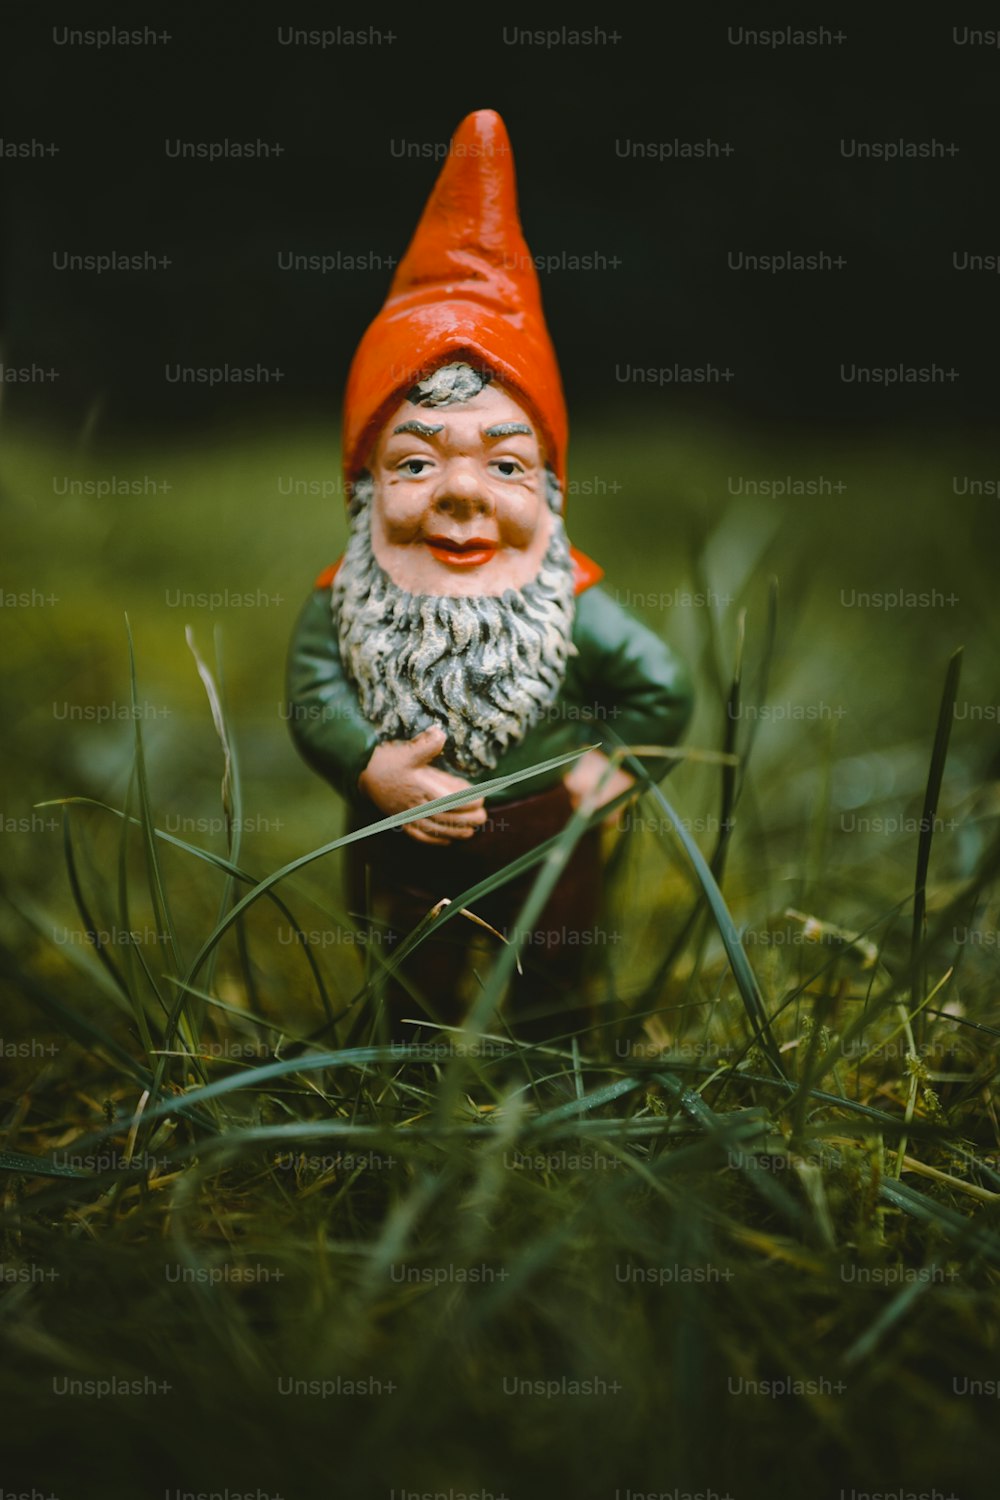 Une figurine de gnome assise dans l’herbe